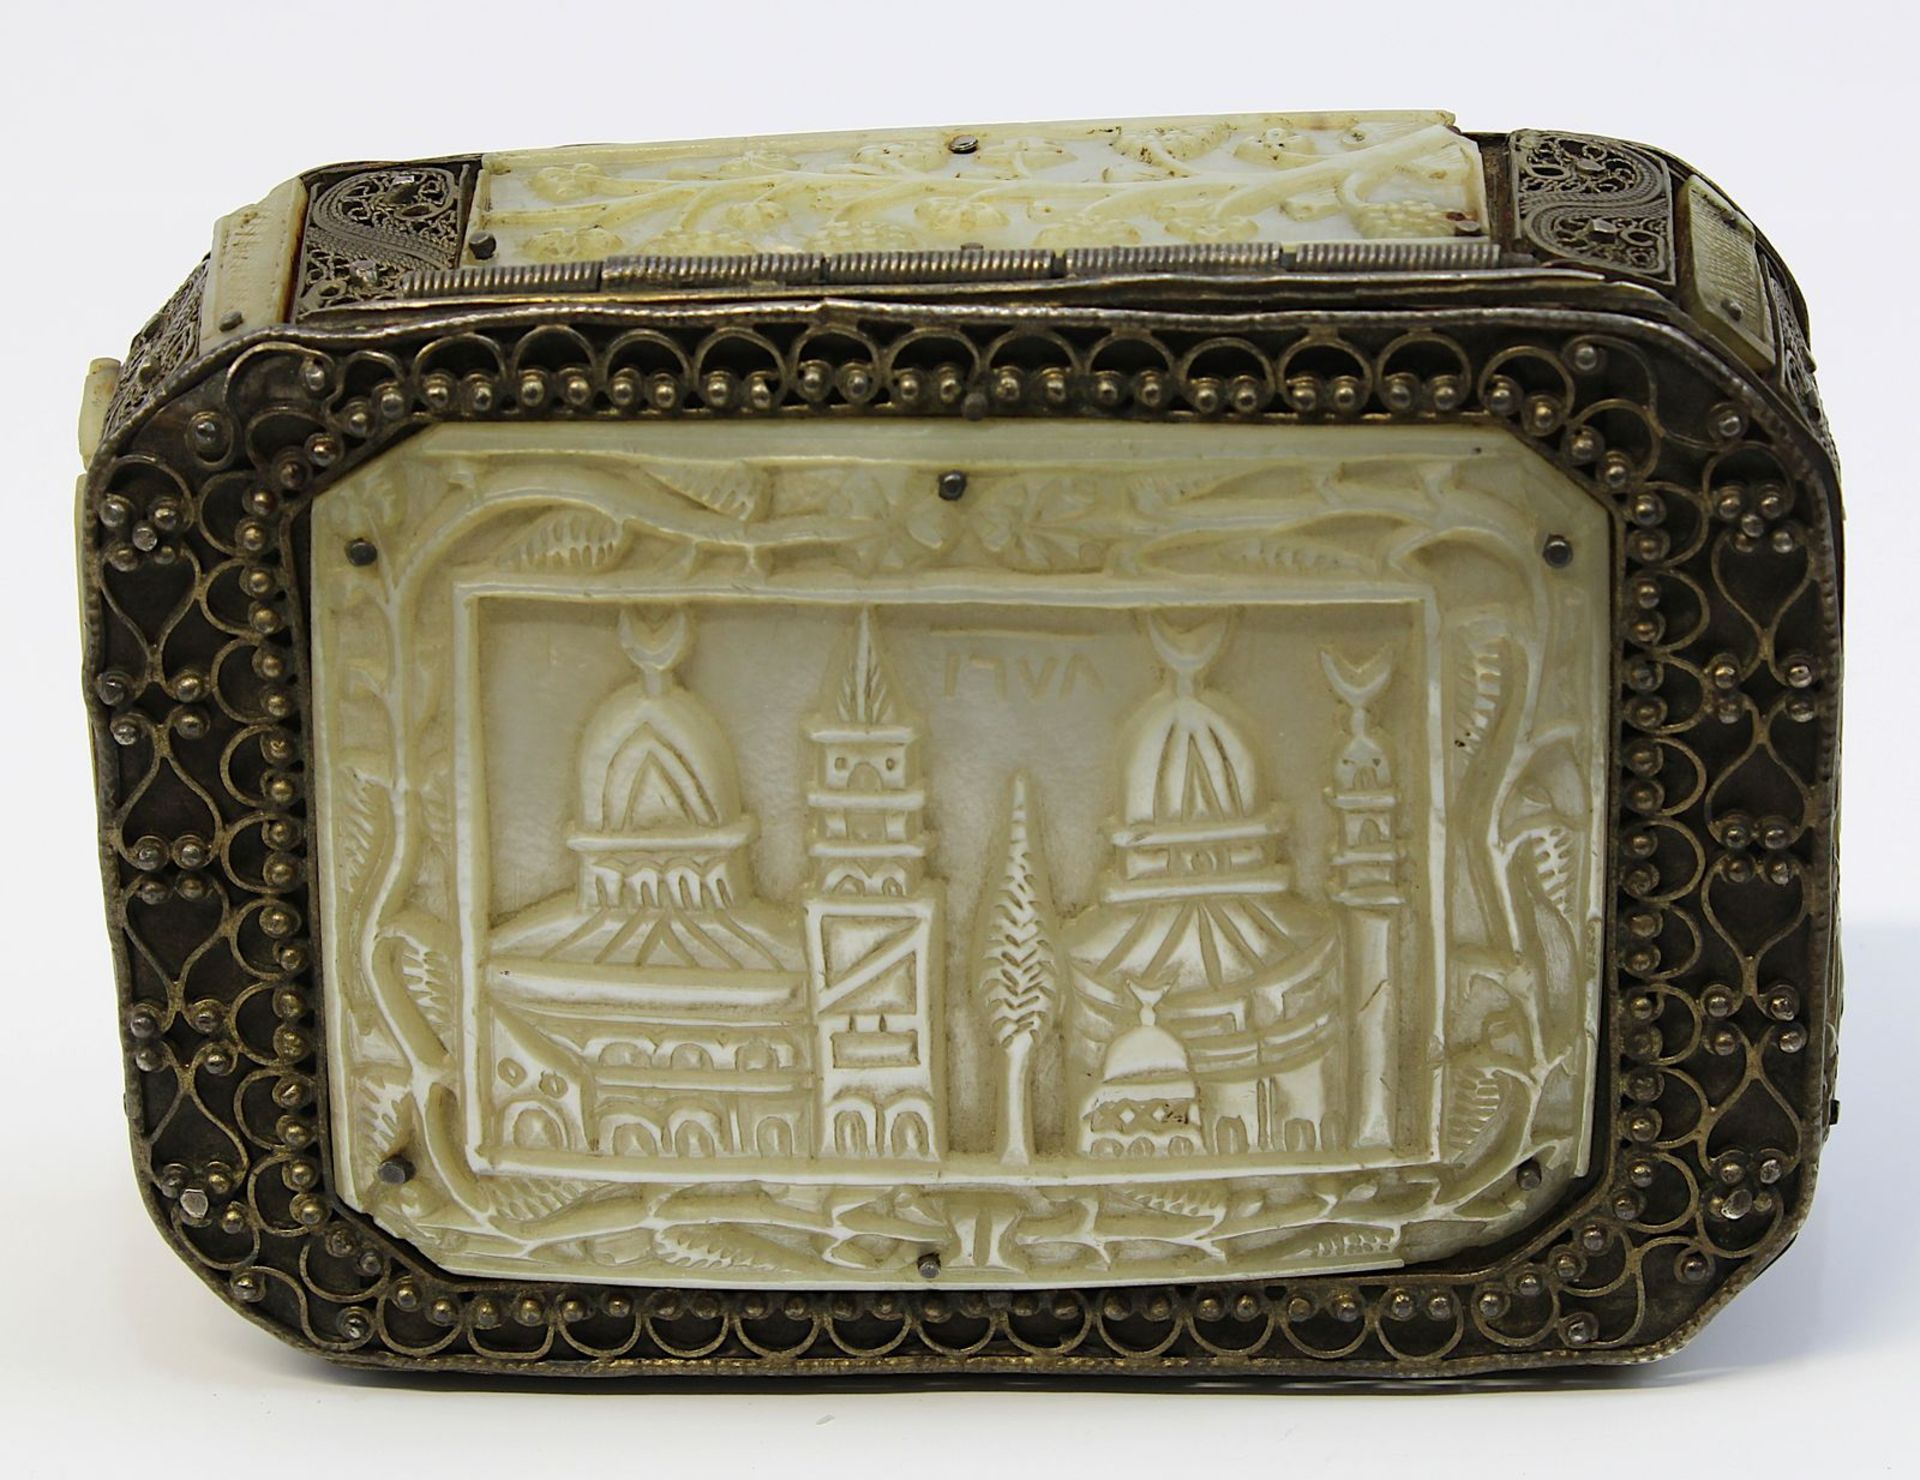 Barockes Pilgersouvenir aus Jerusalem, Silberdose mit Perlmutt, 17. Jh.,innen vergoldetes - Bild 2 aus 4